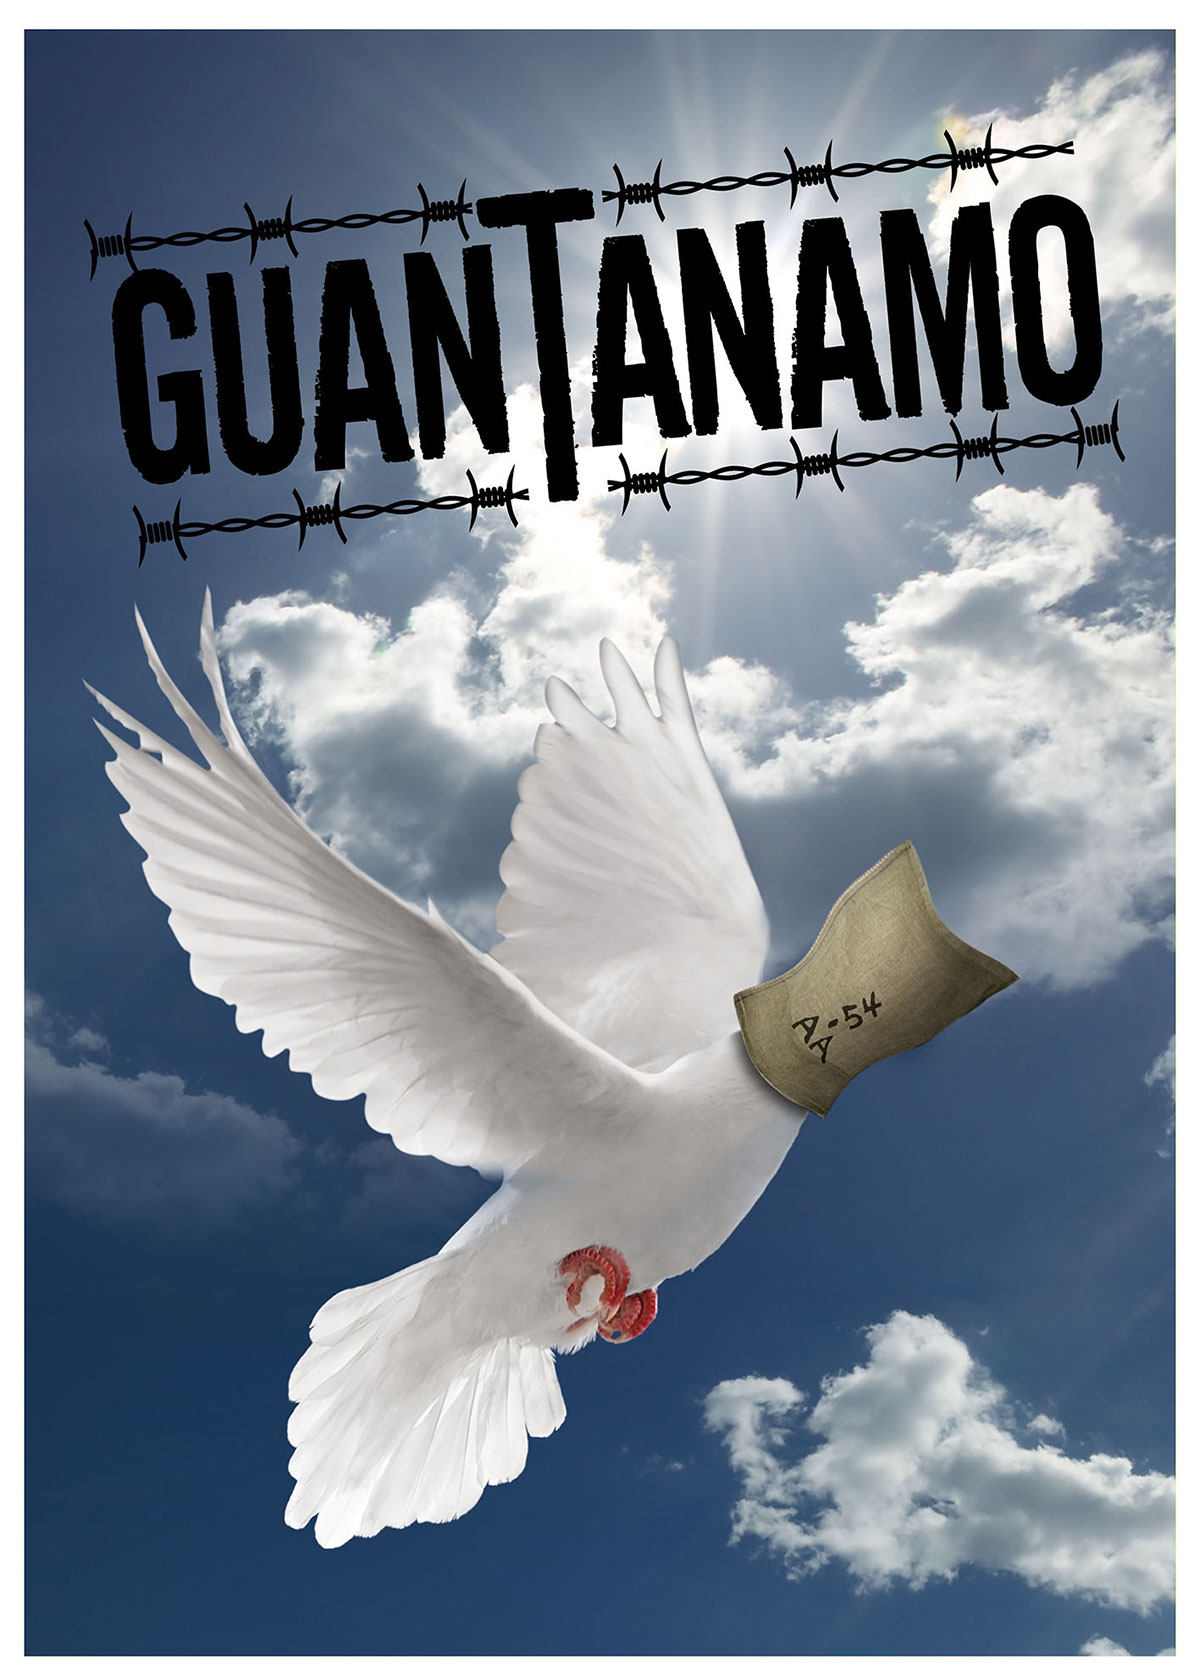 Human rights guantanamo peace dove